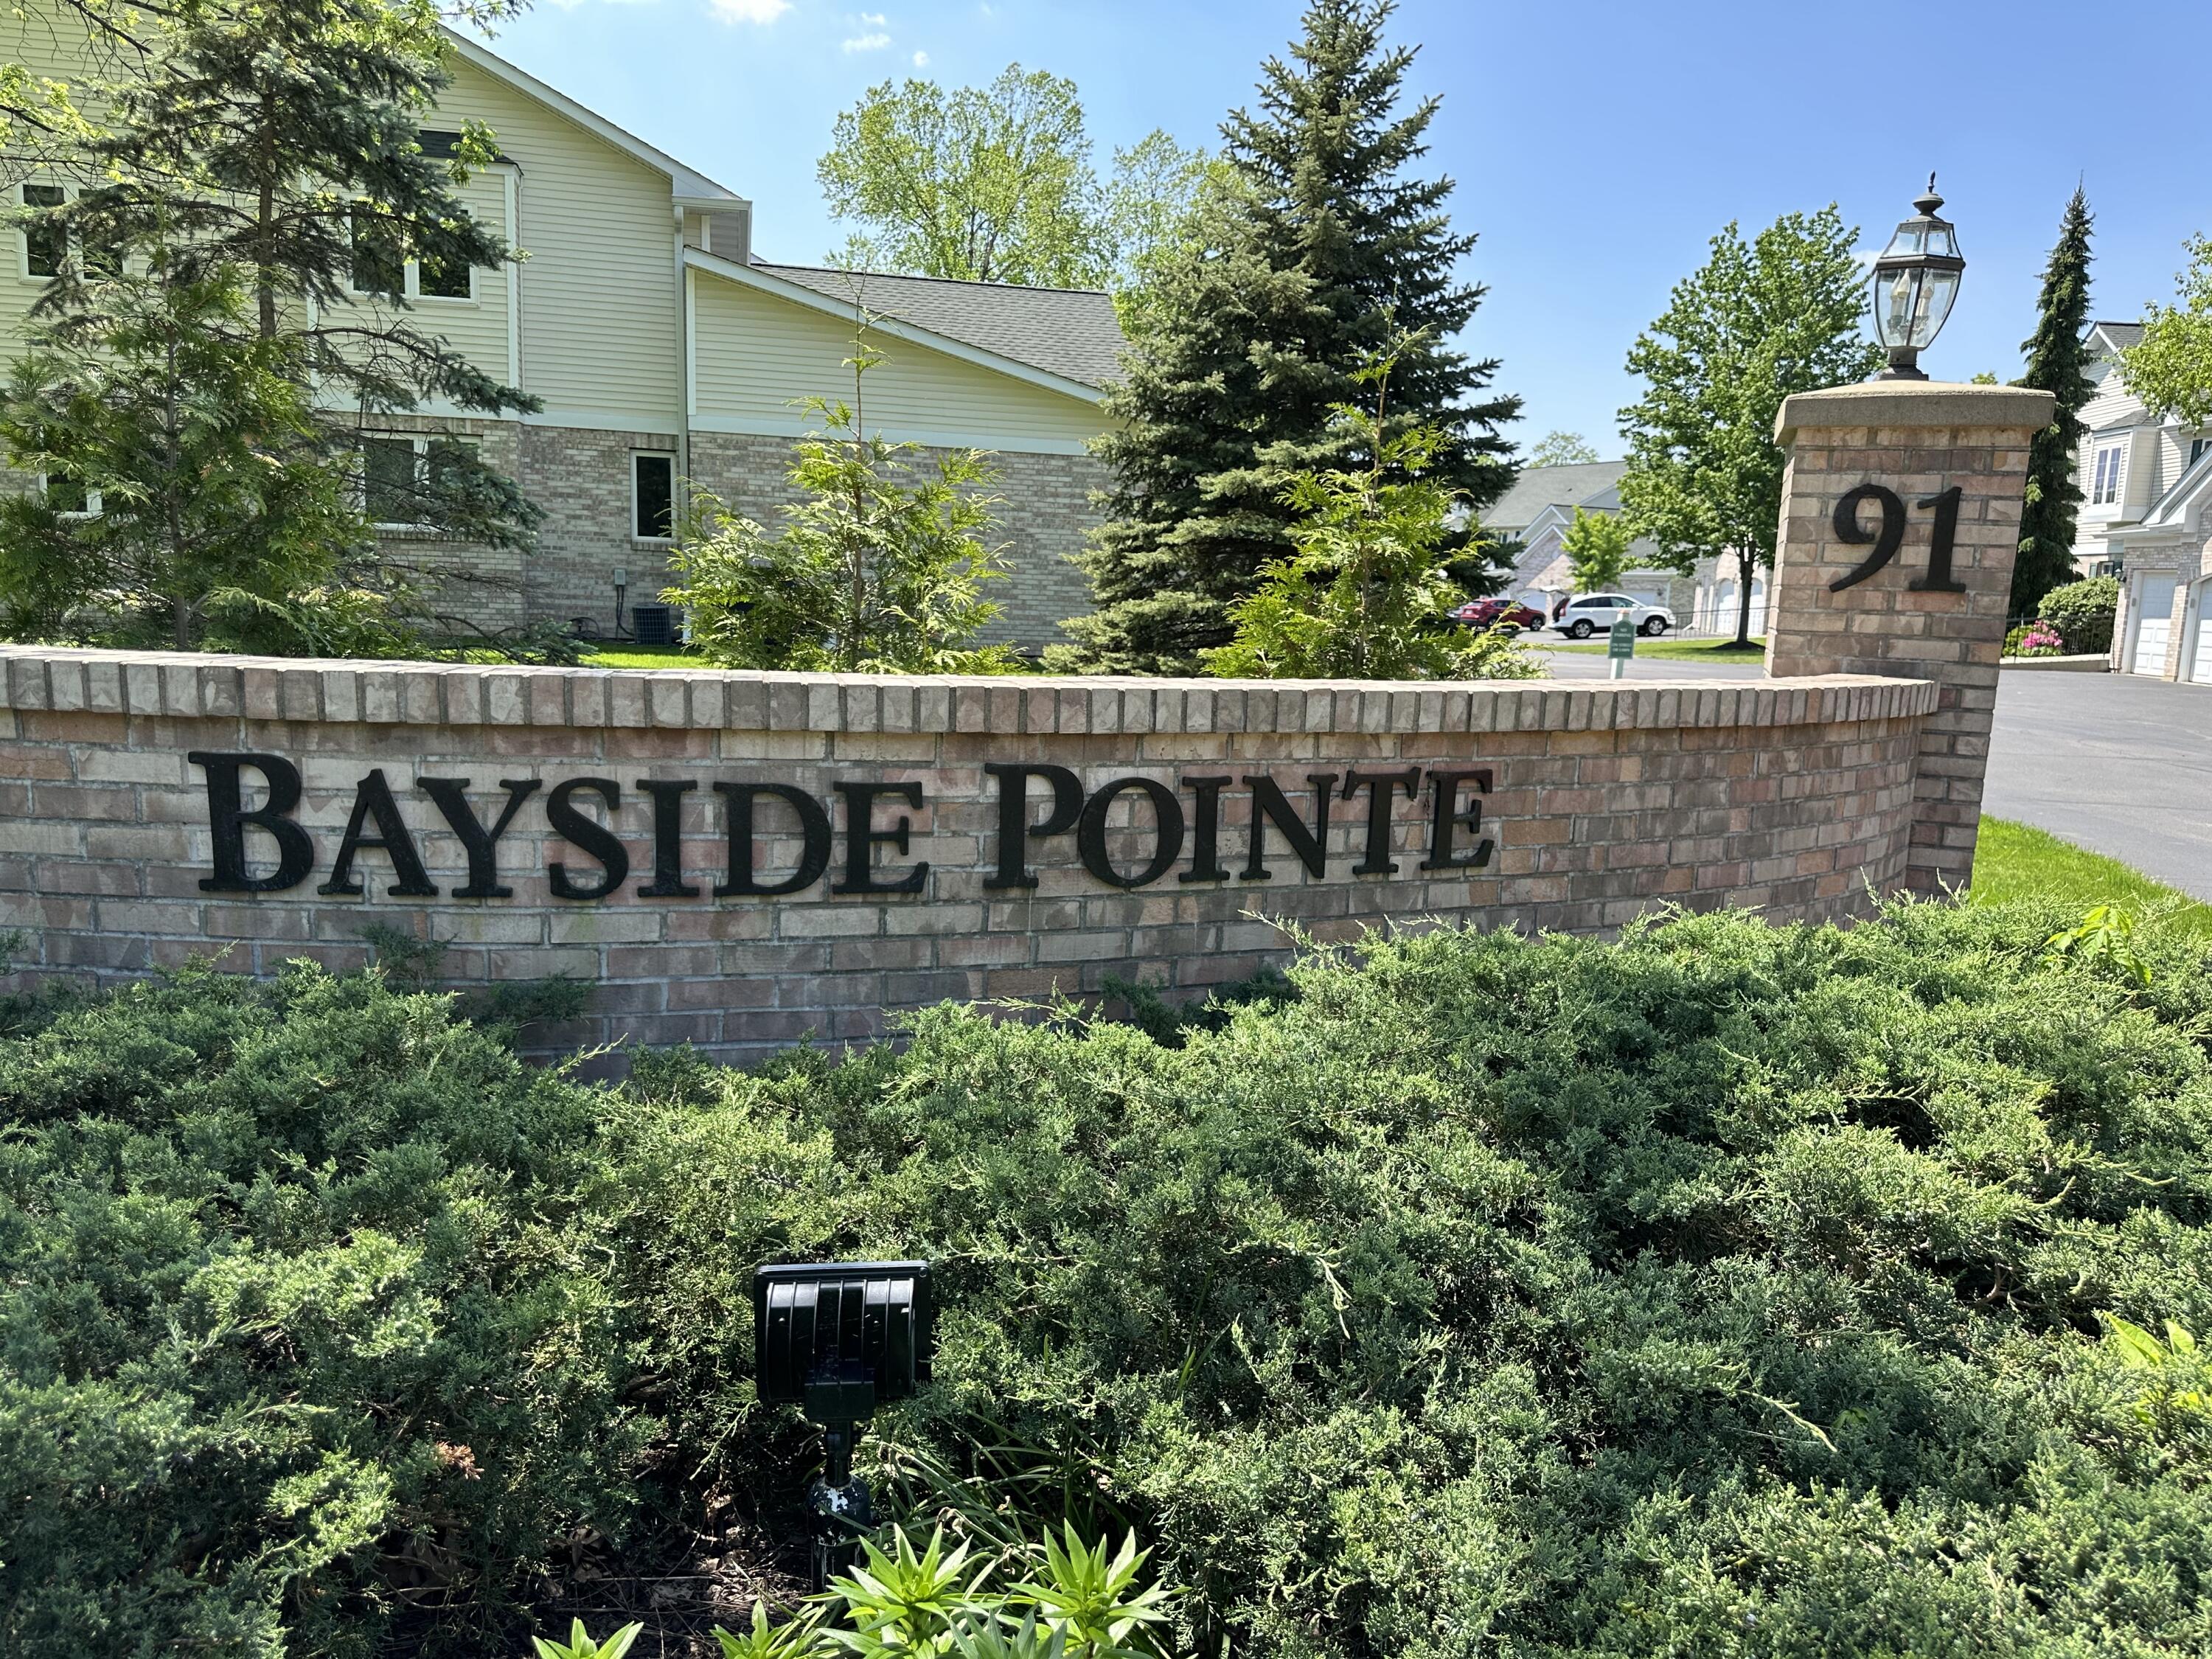 Bayside Pointe